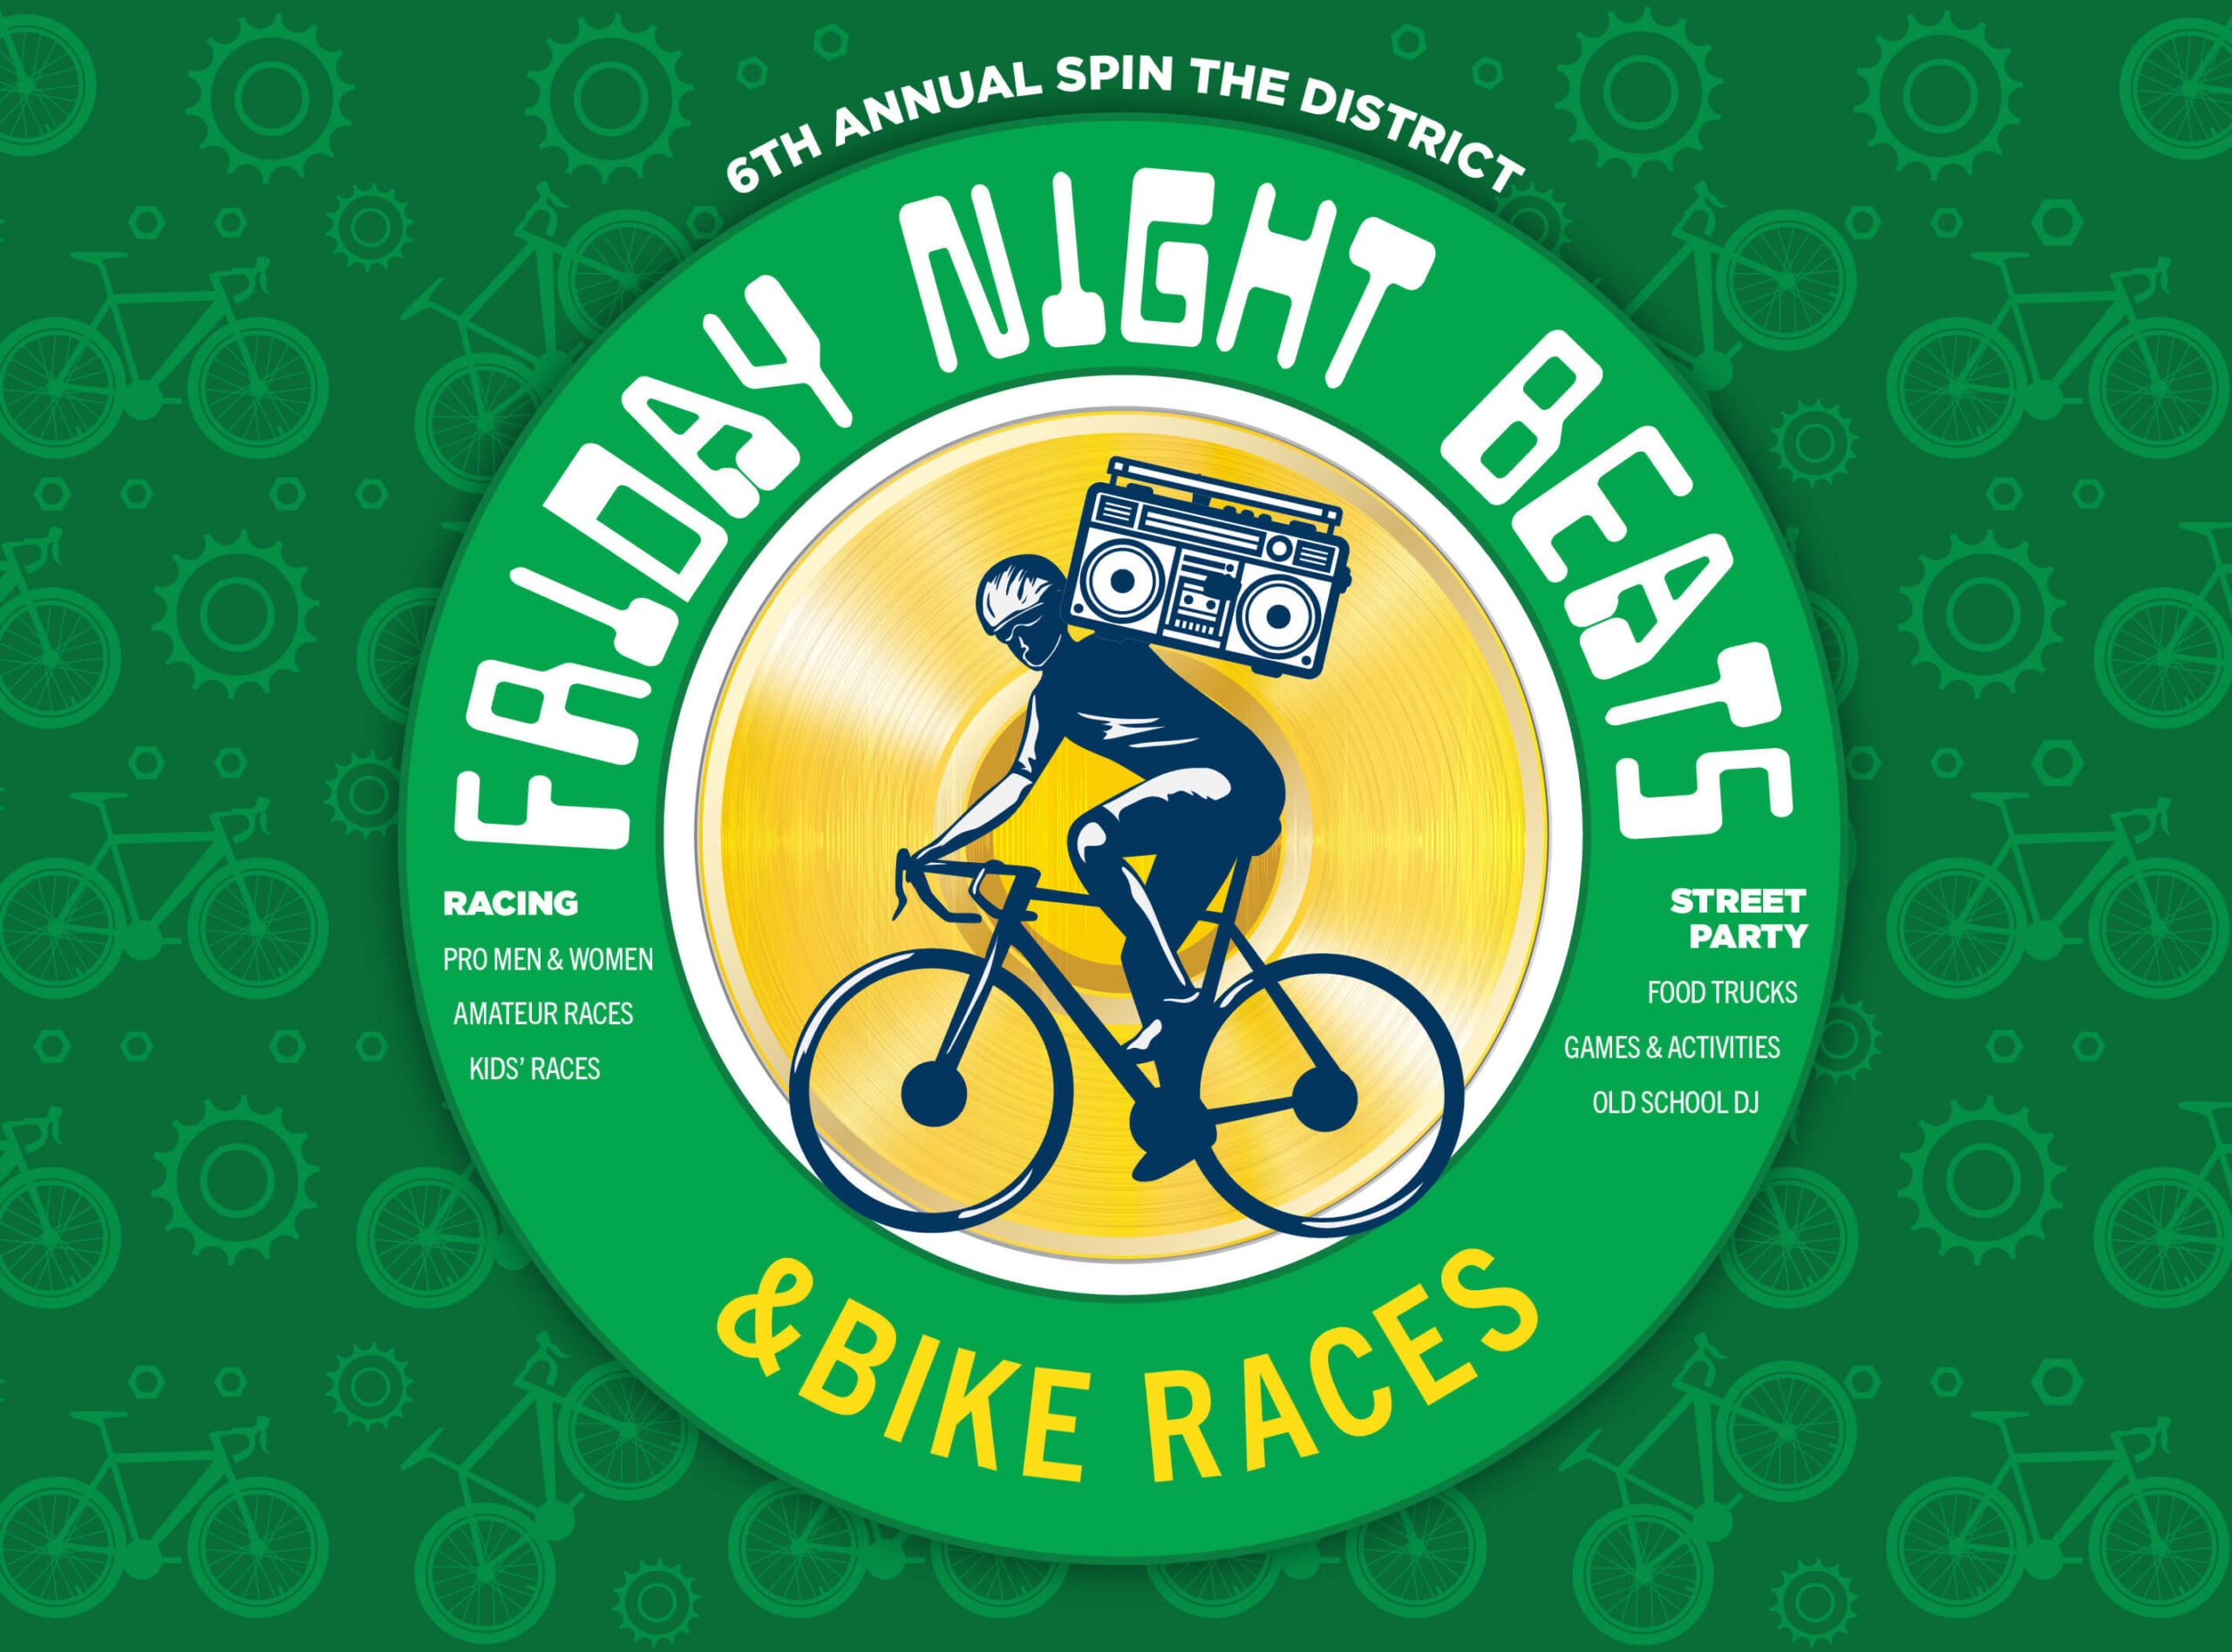 Friday Night Beats & Bike Races